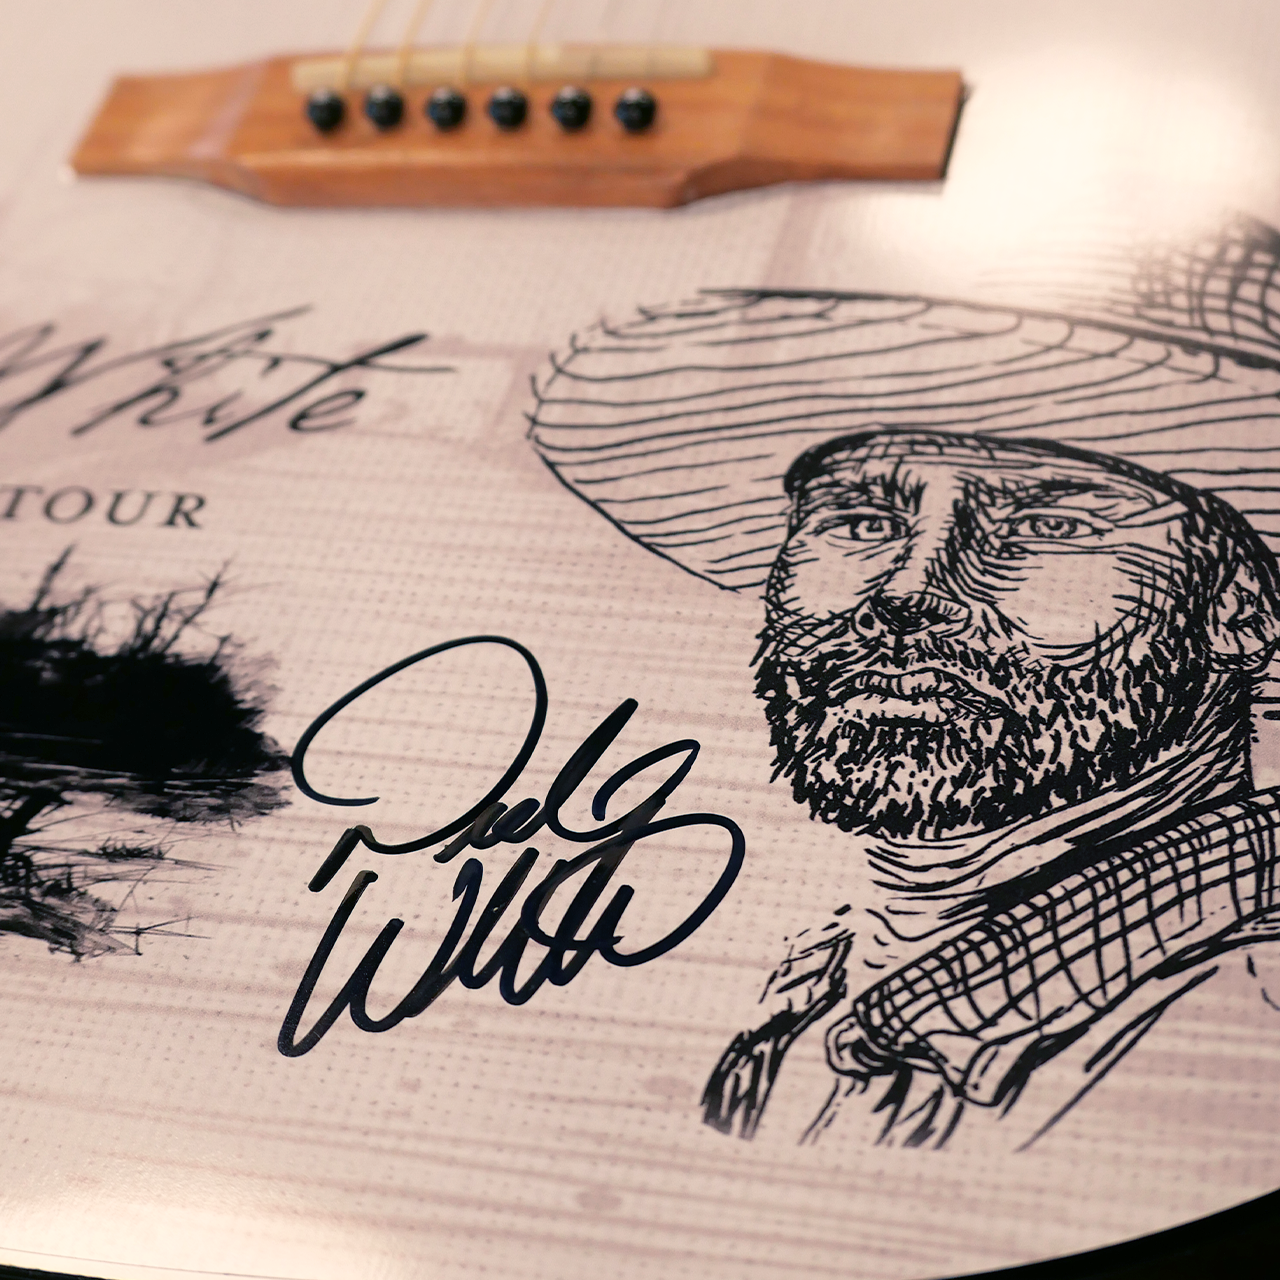 Drake White "The Bridge" Autographed Guitar